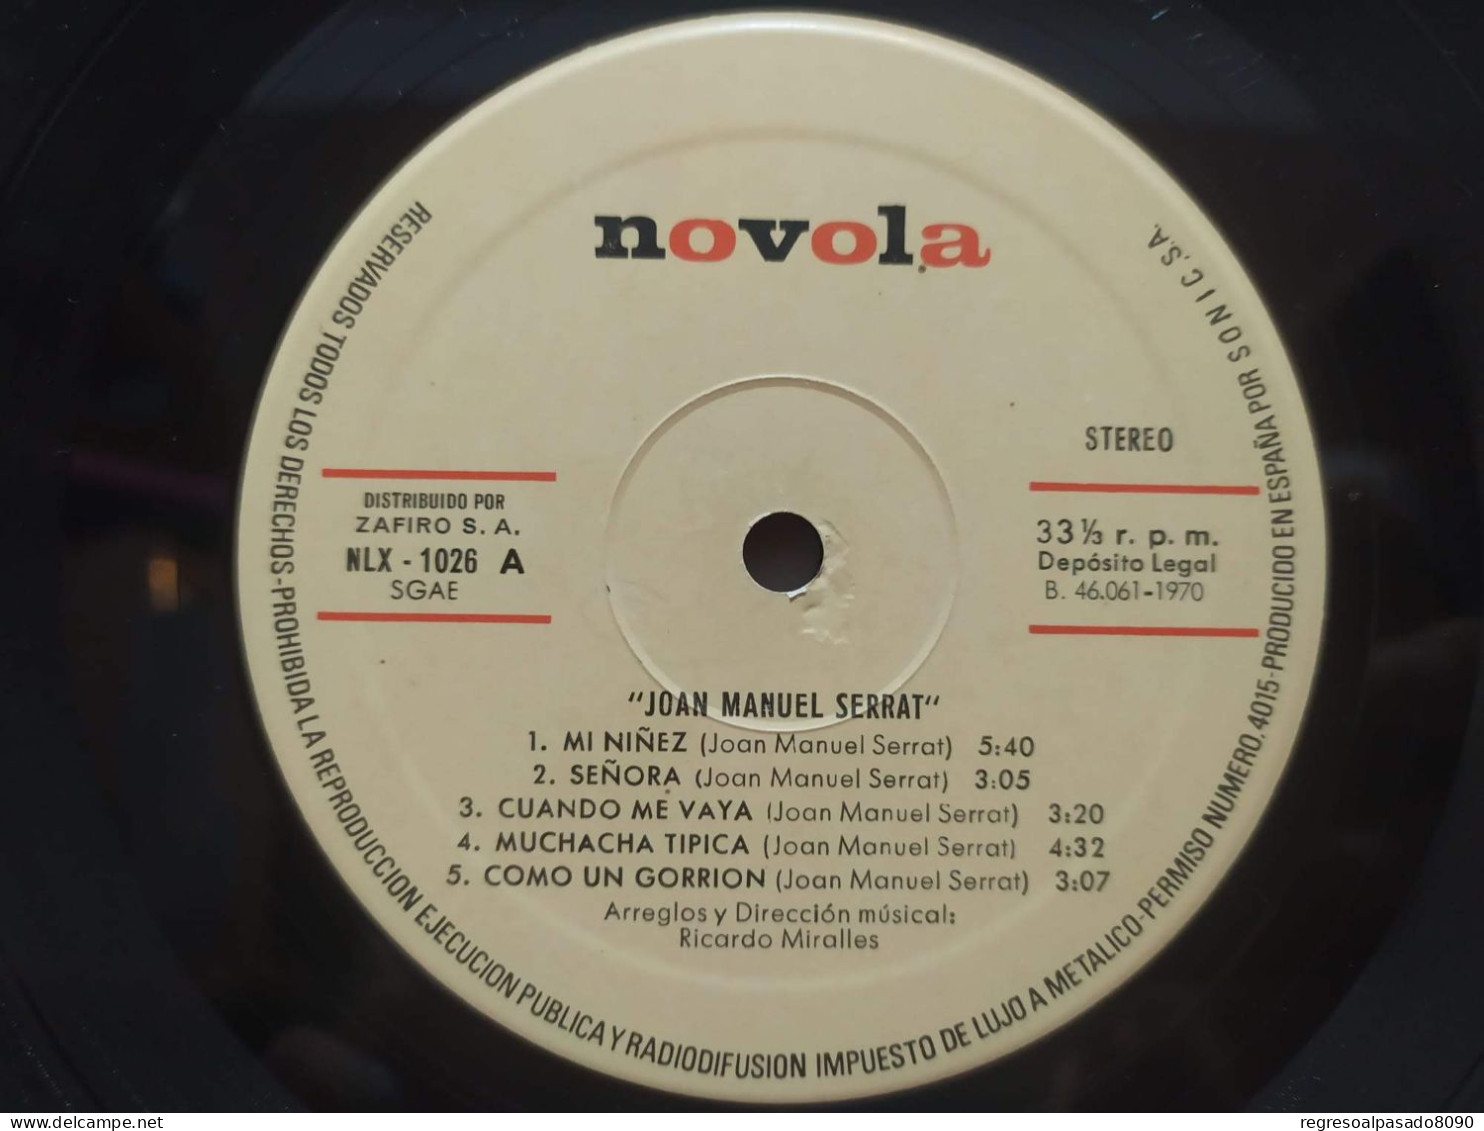 Disco Lp Vinilo Del Cantautor Joan Manuel Serrat Novola 1970 - Unclassified